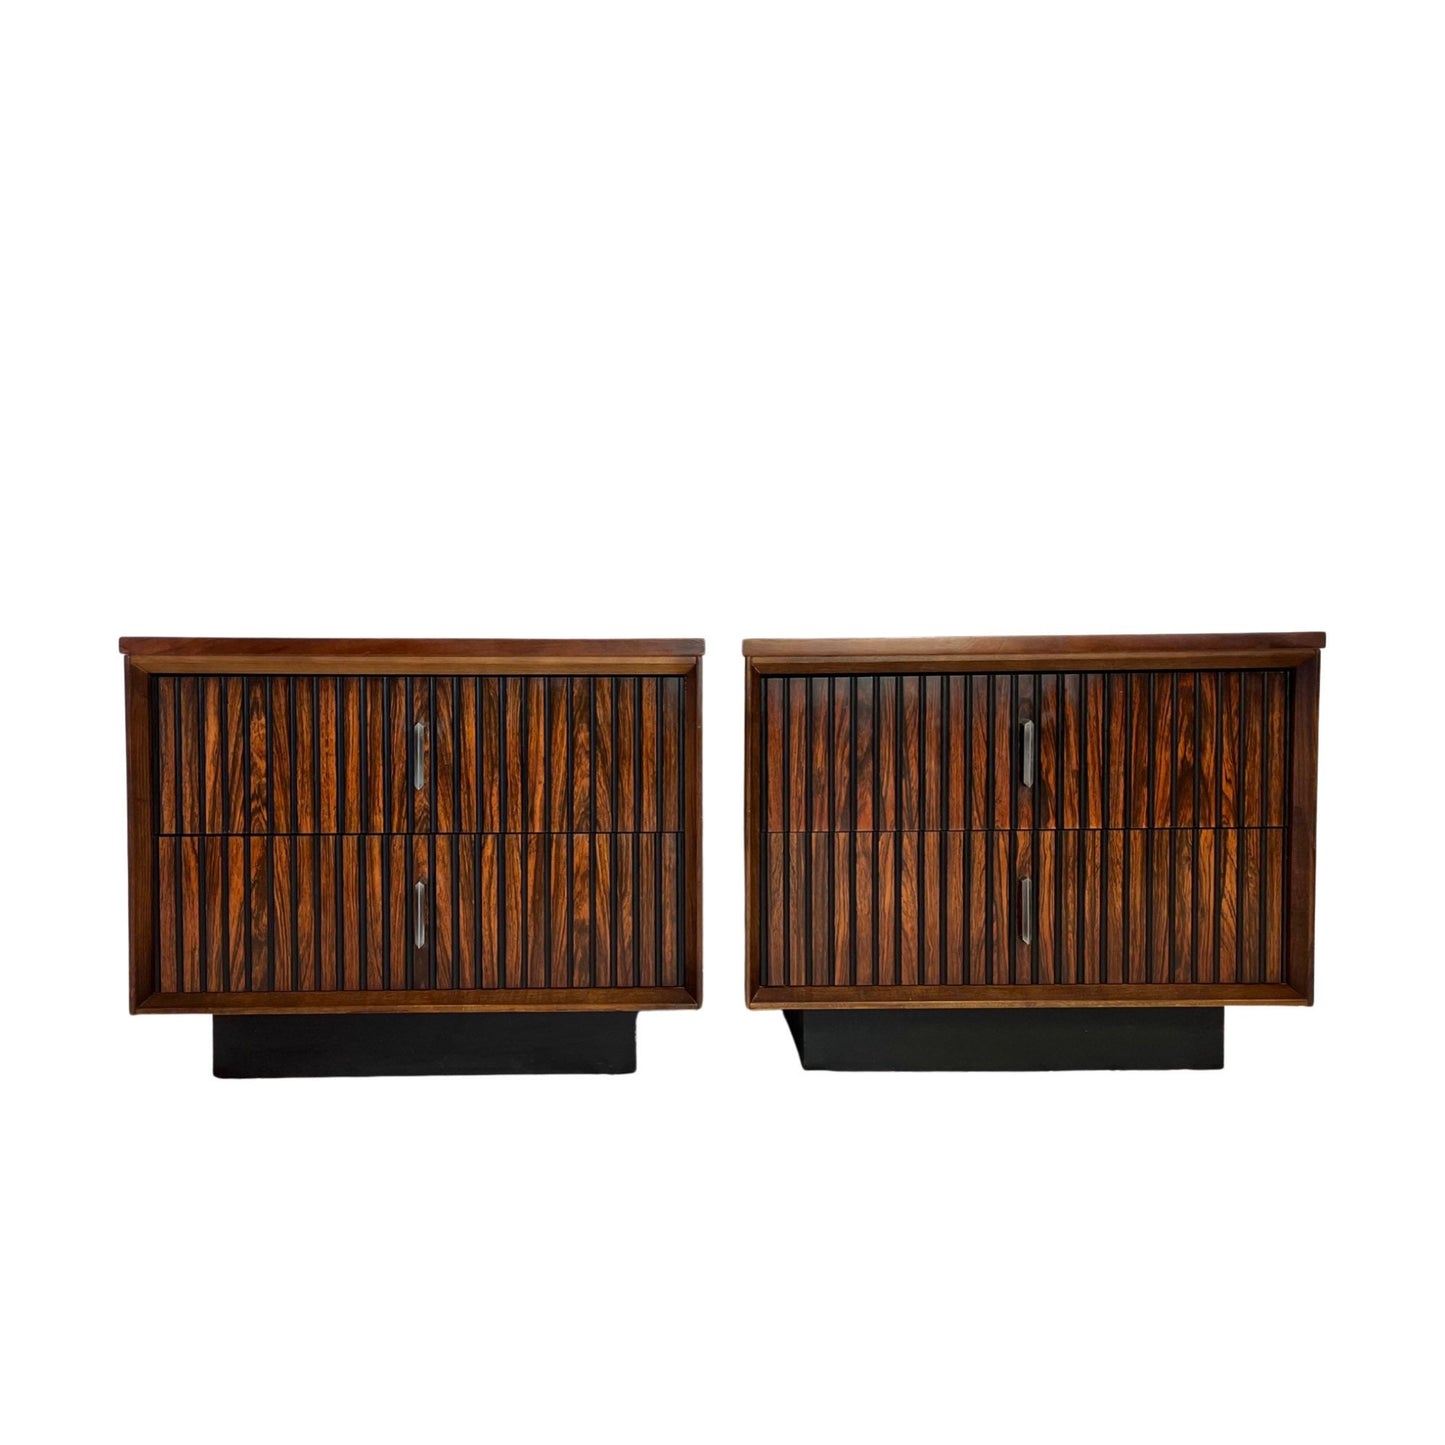 Bassett Furniture Walnut & Rosewood Mid Century Modern Brutalist Pair of Nightstands c. 1960s